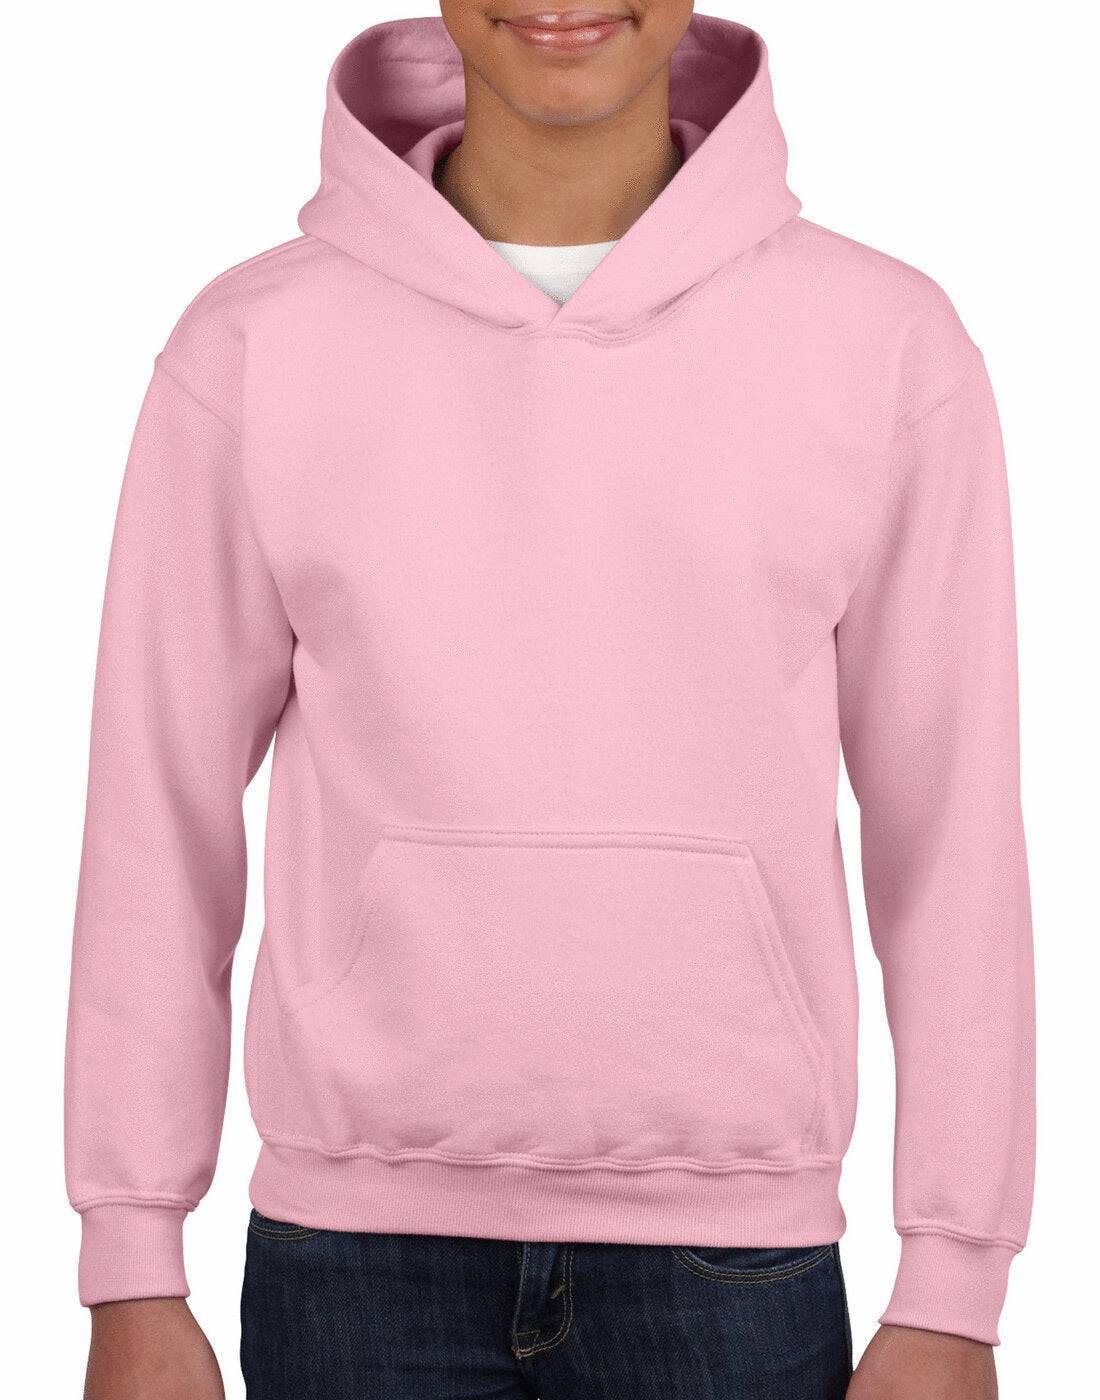 Gildan Kids Heavy Blend Hooded Sweatshirt - Light Pink